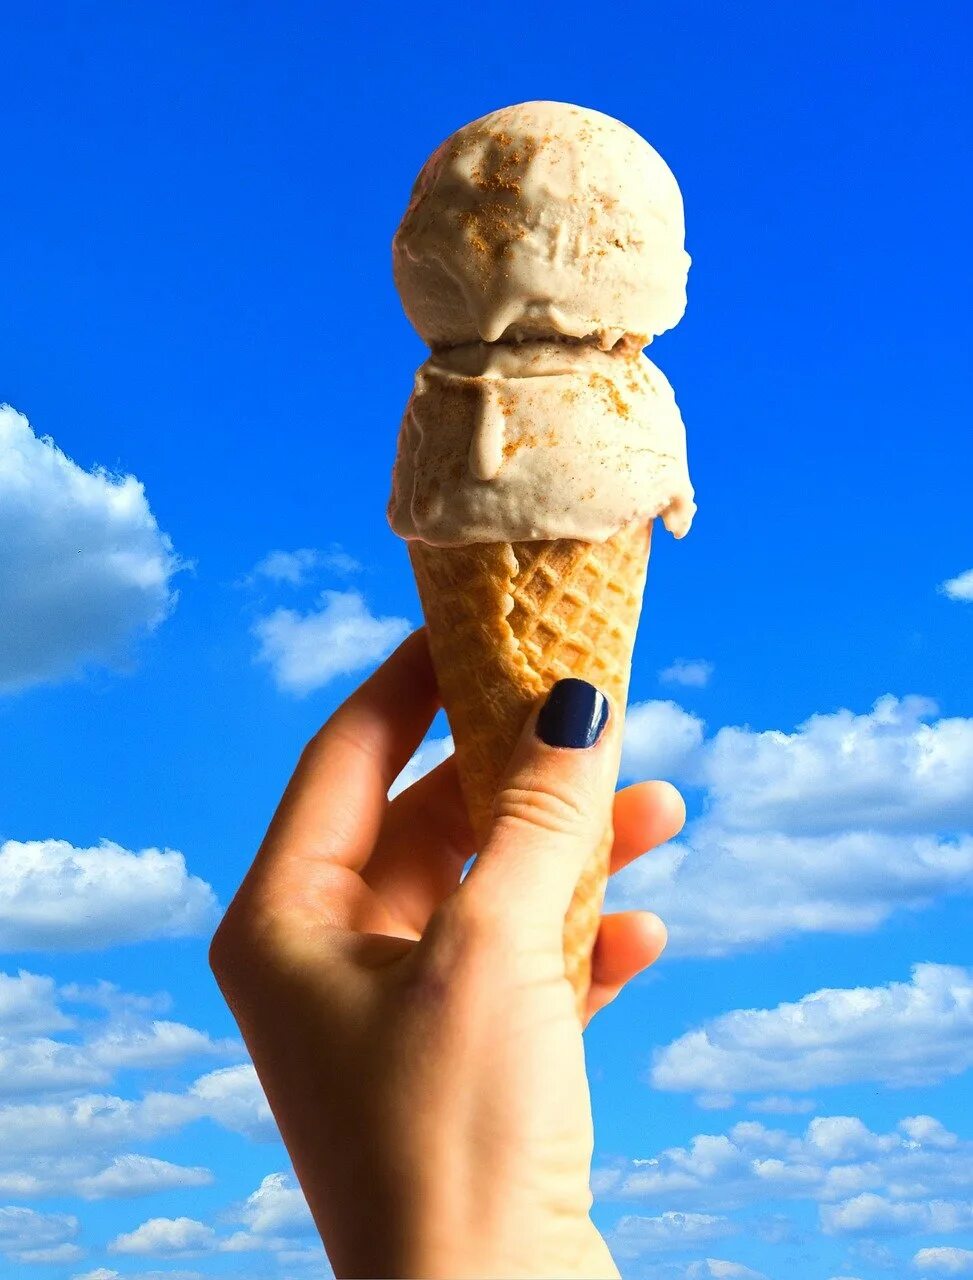 Купи мороженое хочу мороженое. Мороженое. Мороженое рожок. Красивое мороженое. Мороженое лето.